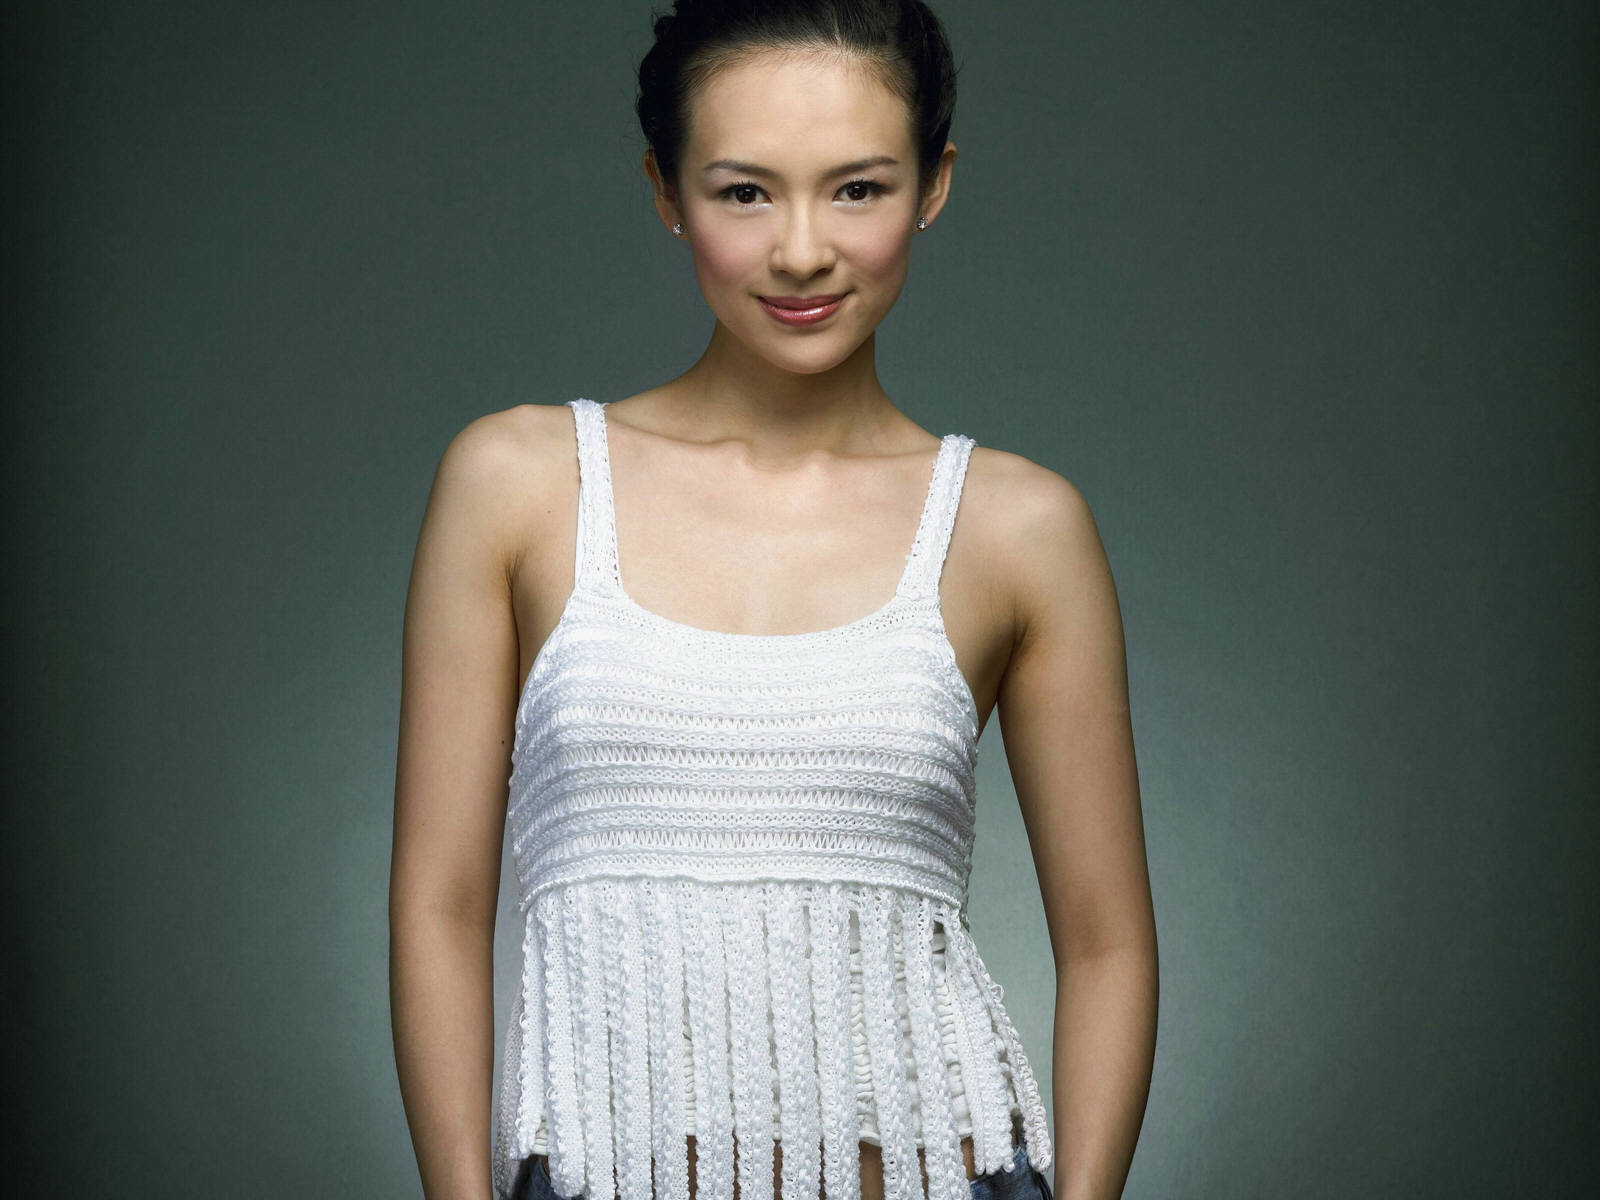 http://4.bp.blogspot.com/-HbHXIZJEtPA/TZIa0uixjUI/AAAAAAAAMi0/v7VTbm6t4TE/s1600/chinese-actress-Zhang-Ziyi-wallpapers%2B%25282%2529.jpg